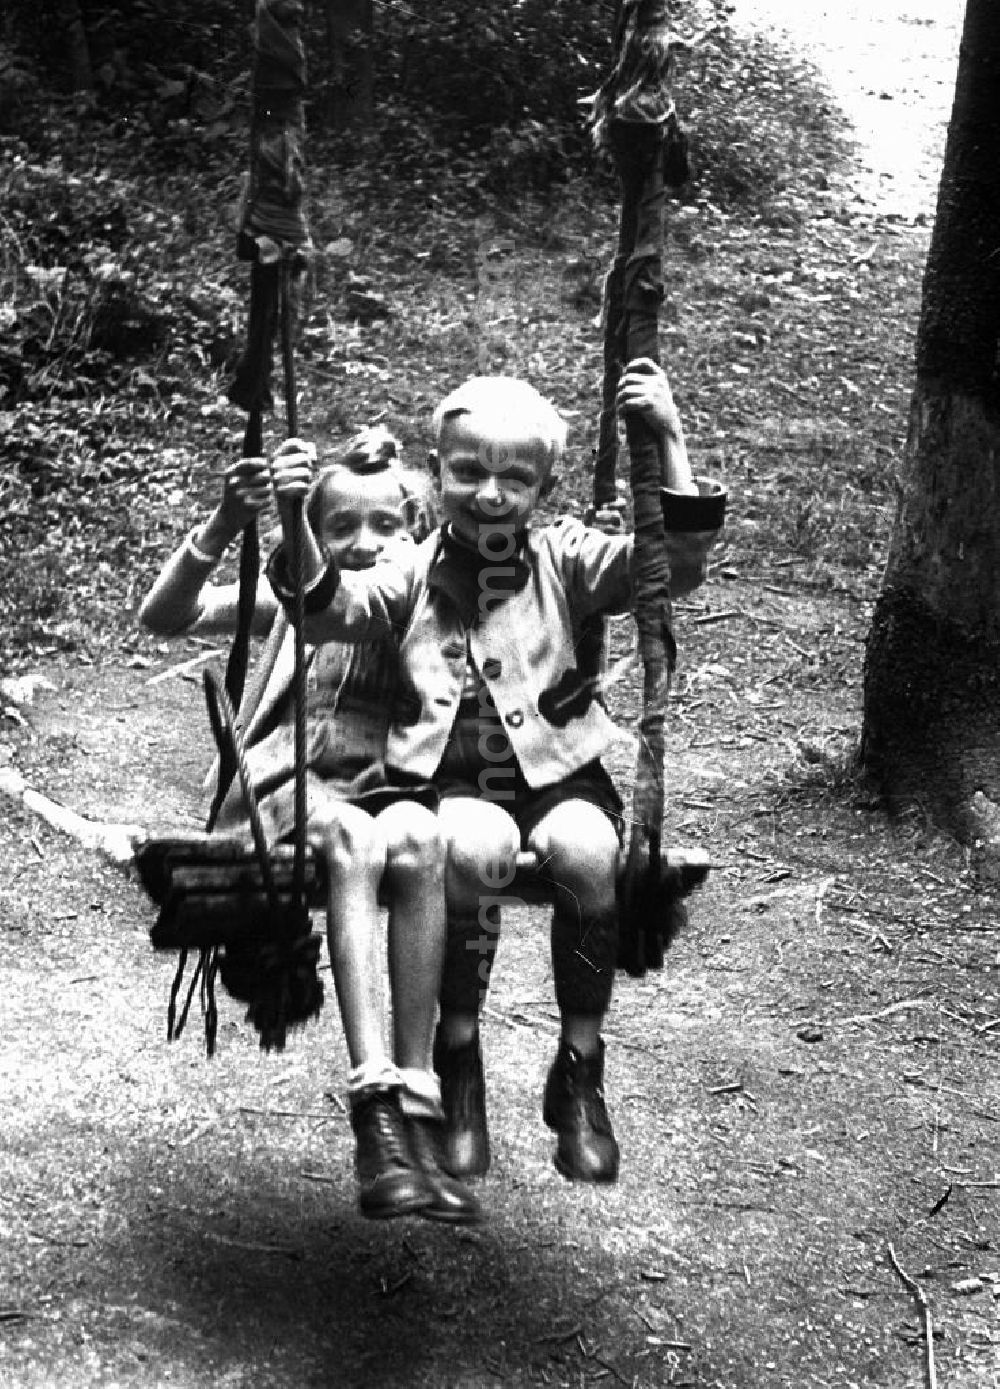 GDR image archive: Schierke - Geschwister schaukeln anlässlich eines Ausflugs in den Harz. Sisters and brothes / sibo swing during a trip to the Harz Mountains.